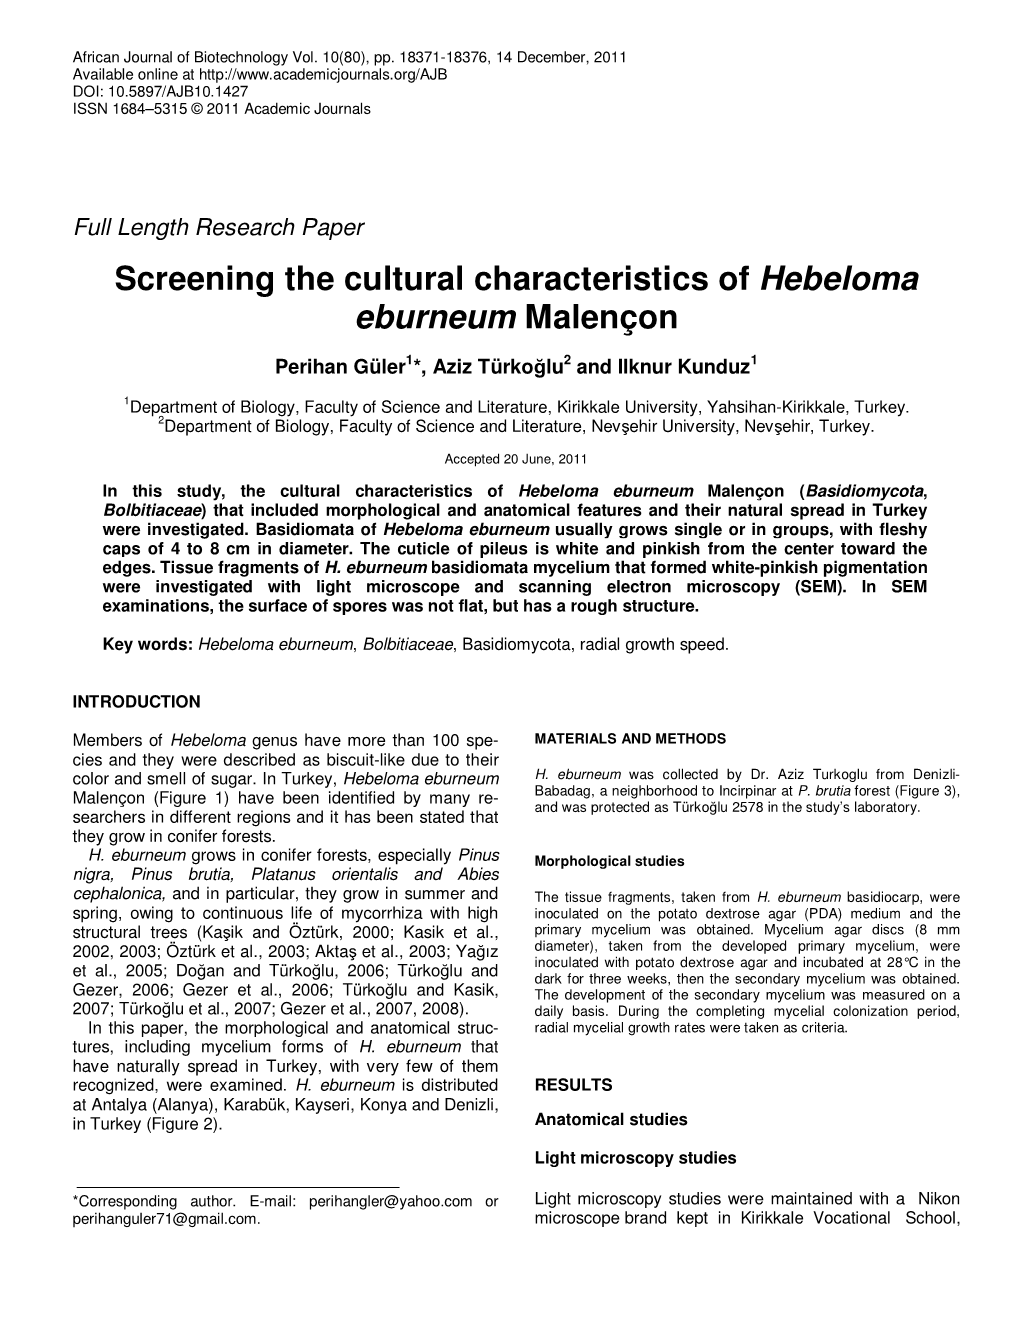 Screening the Cultural Characteristics of Hebeloma Eburneum Malençon